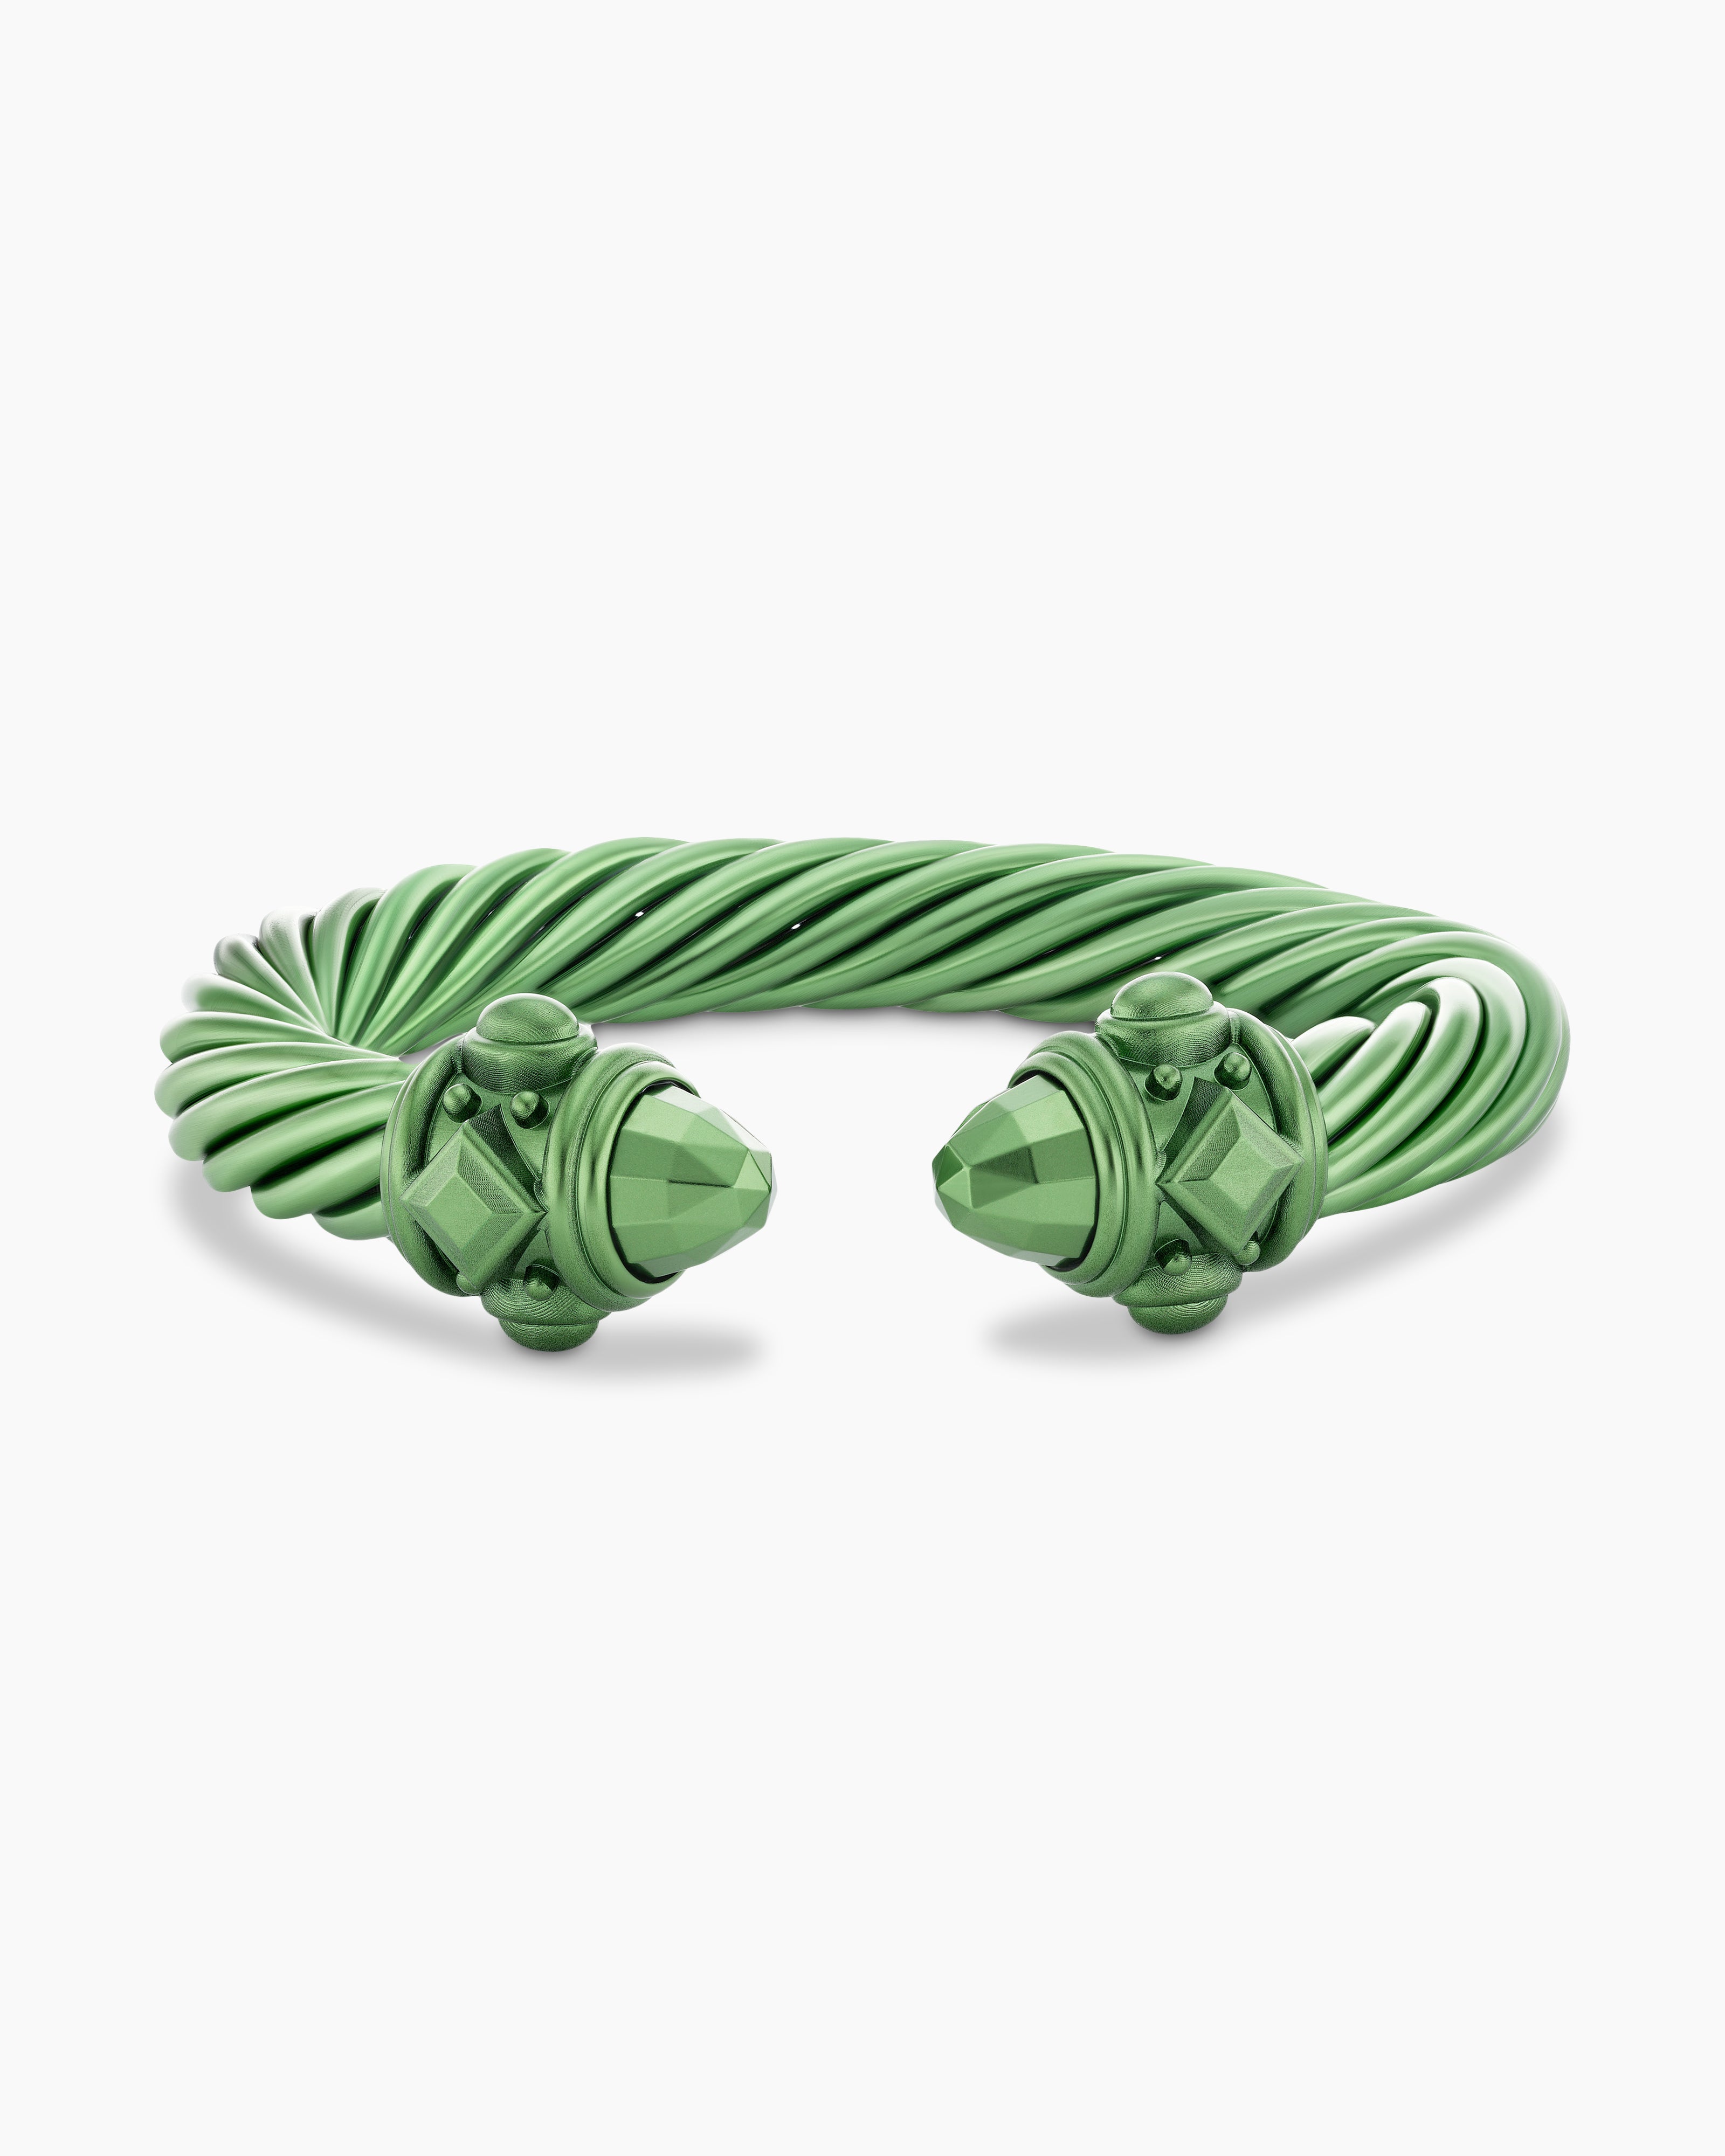 Buy Gold Bracelet With Green Stones, Green Bracelet for Women and Teen  Girls, Dainty Gold Slider Bracelet, Tennis Bracelet With Green Stones  Online in India - Etsy